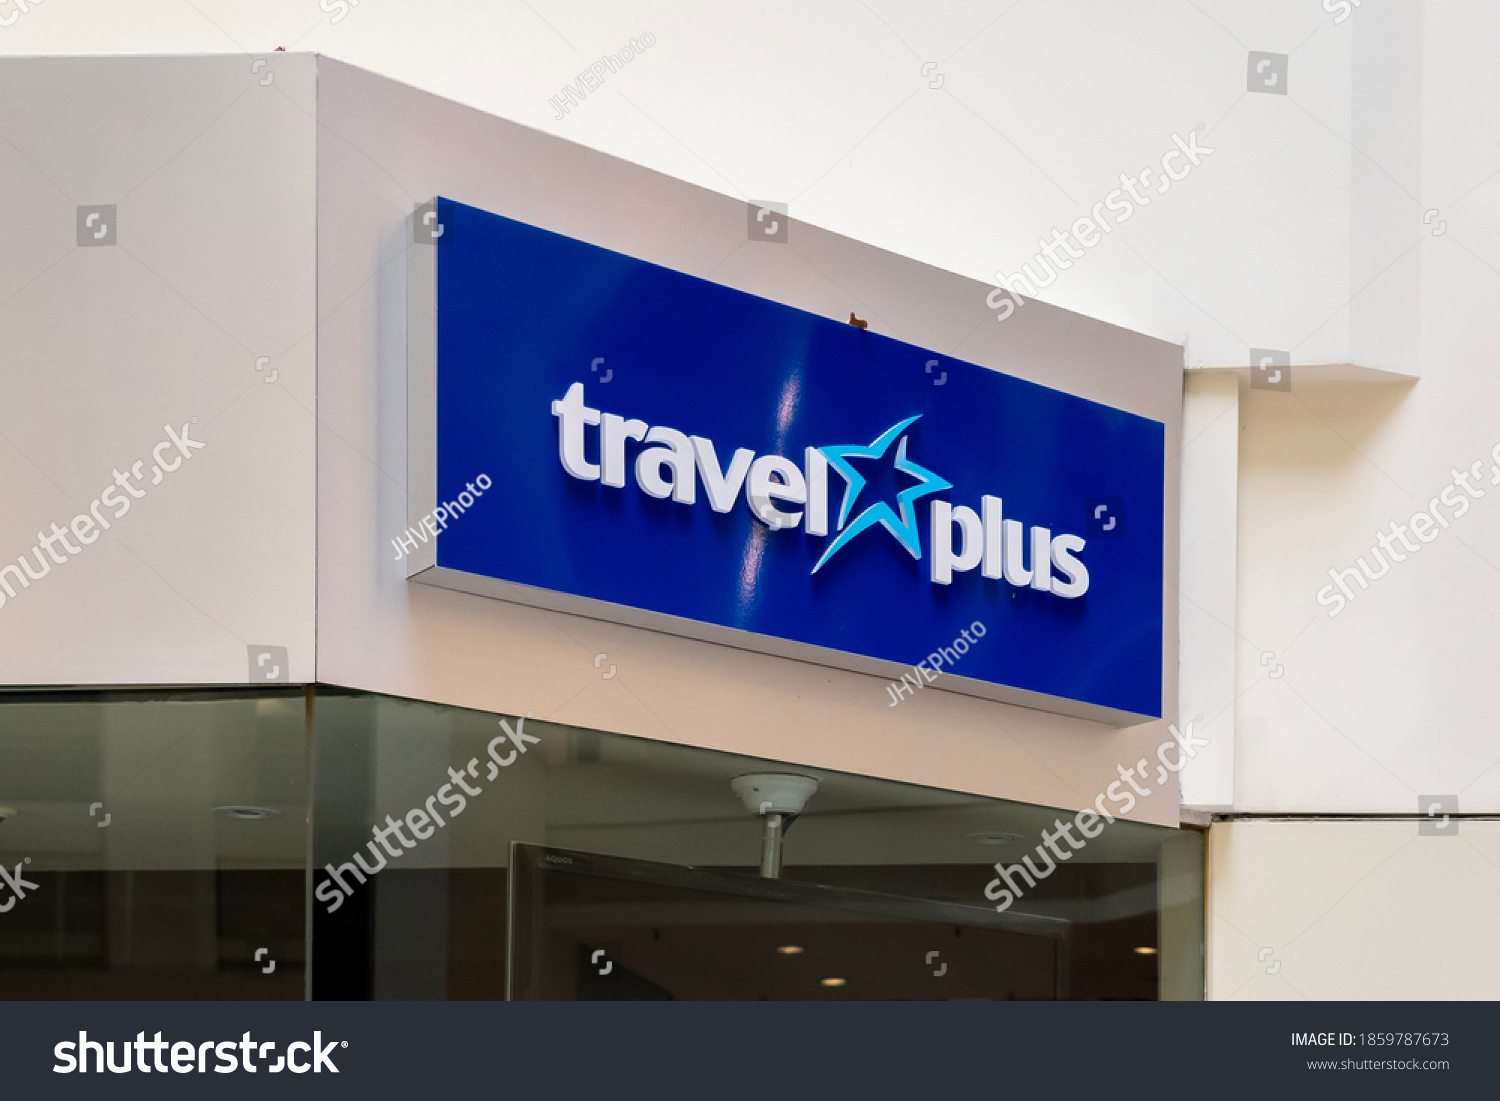 travel plus brand